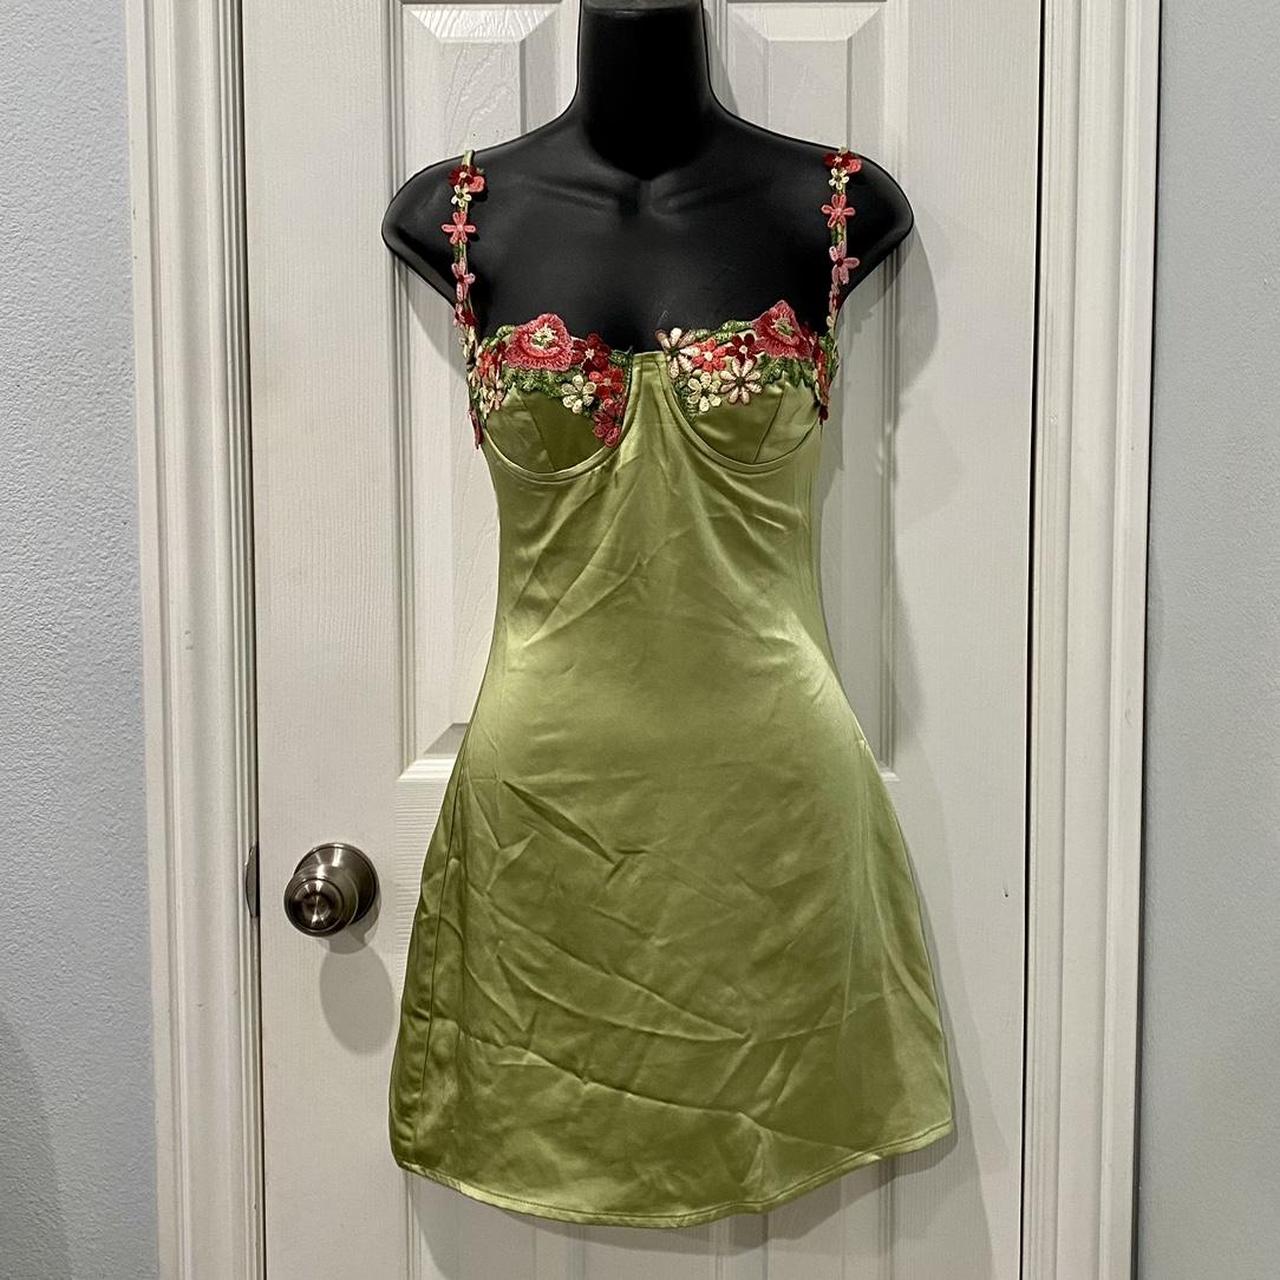 Princess Polly Women's Green Kenzie Mini Dress - Size 0